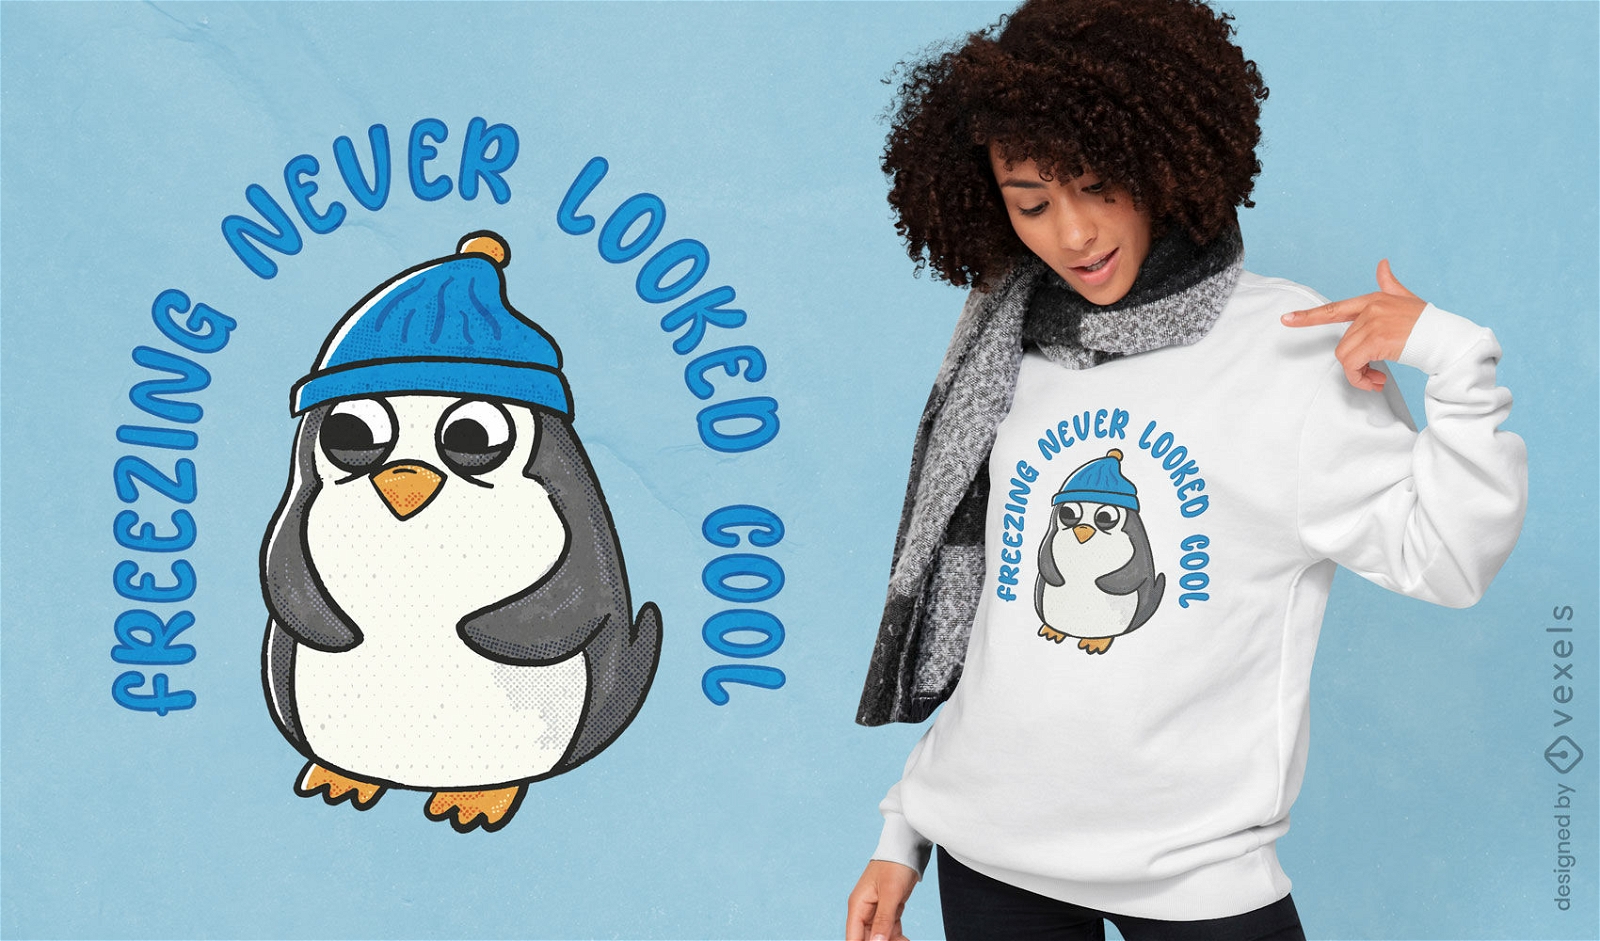 Genial diseño de camiseta de pingüino.